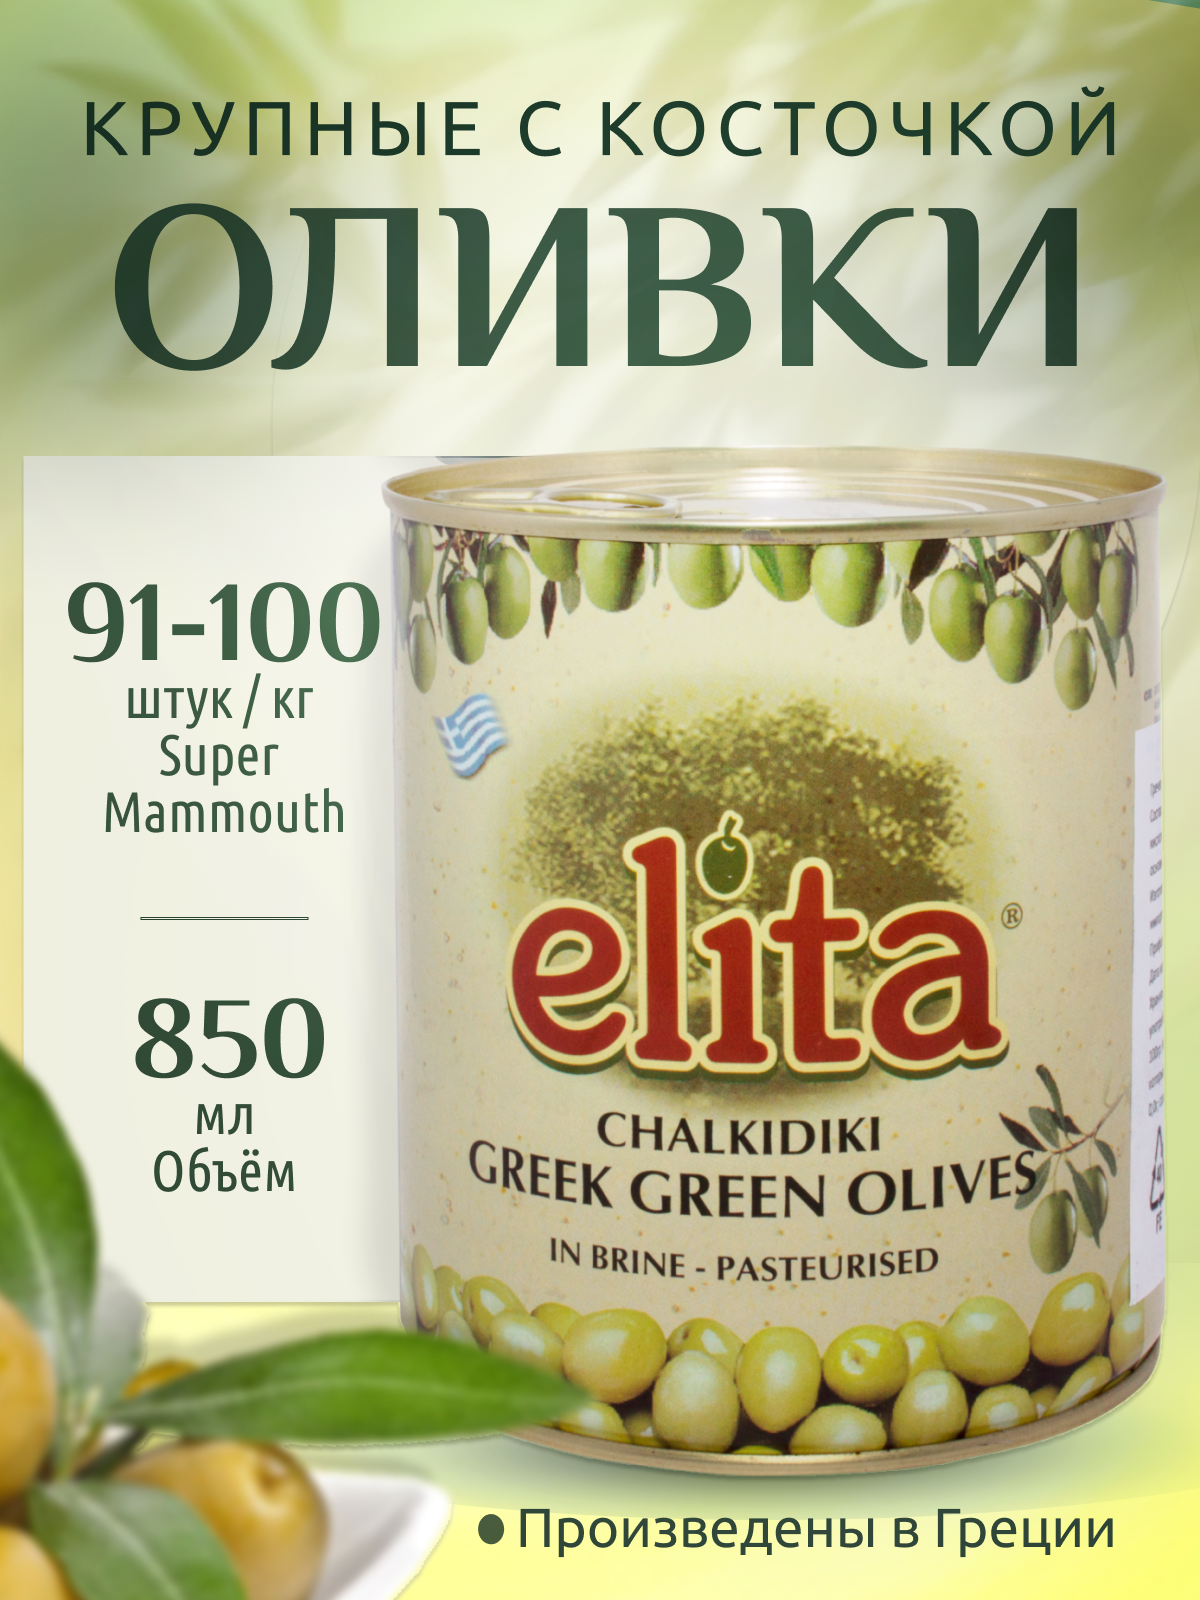 Греческие оливки с косточкой S. Mammouth 91-100 (Гигант) "ELITA" 850 мл ж/б